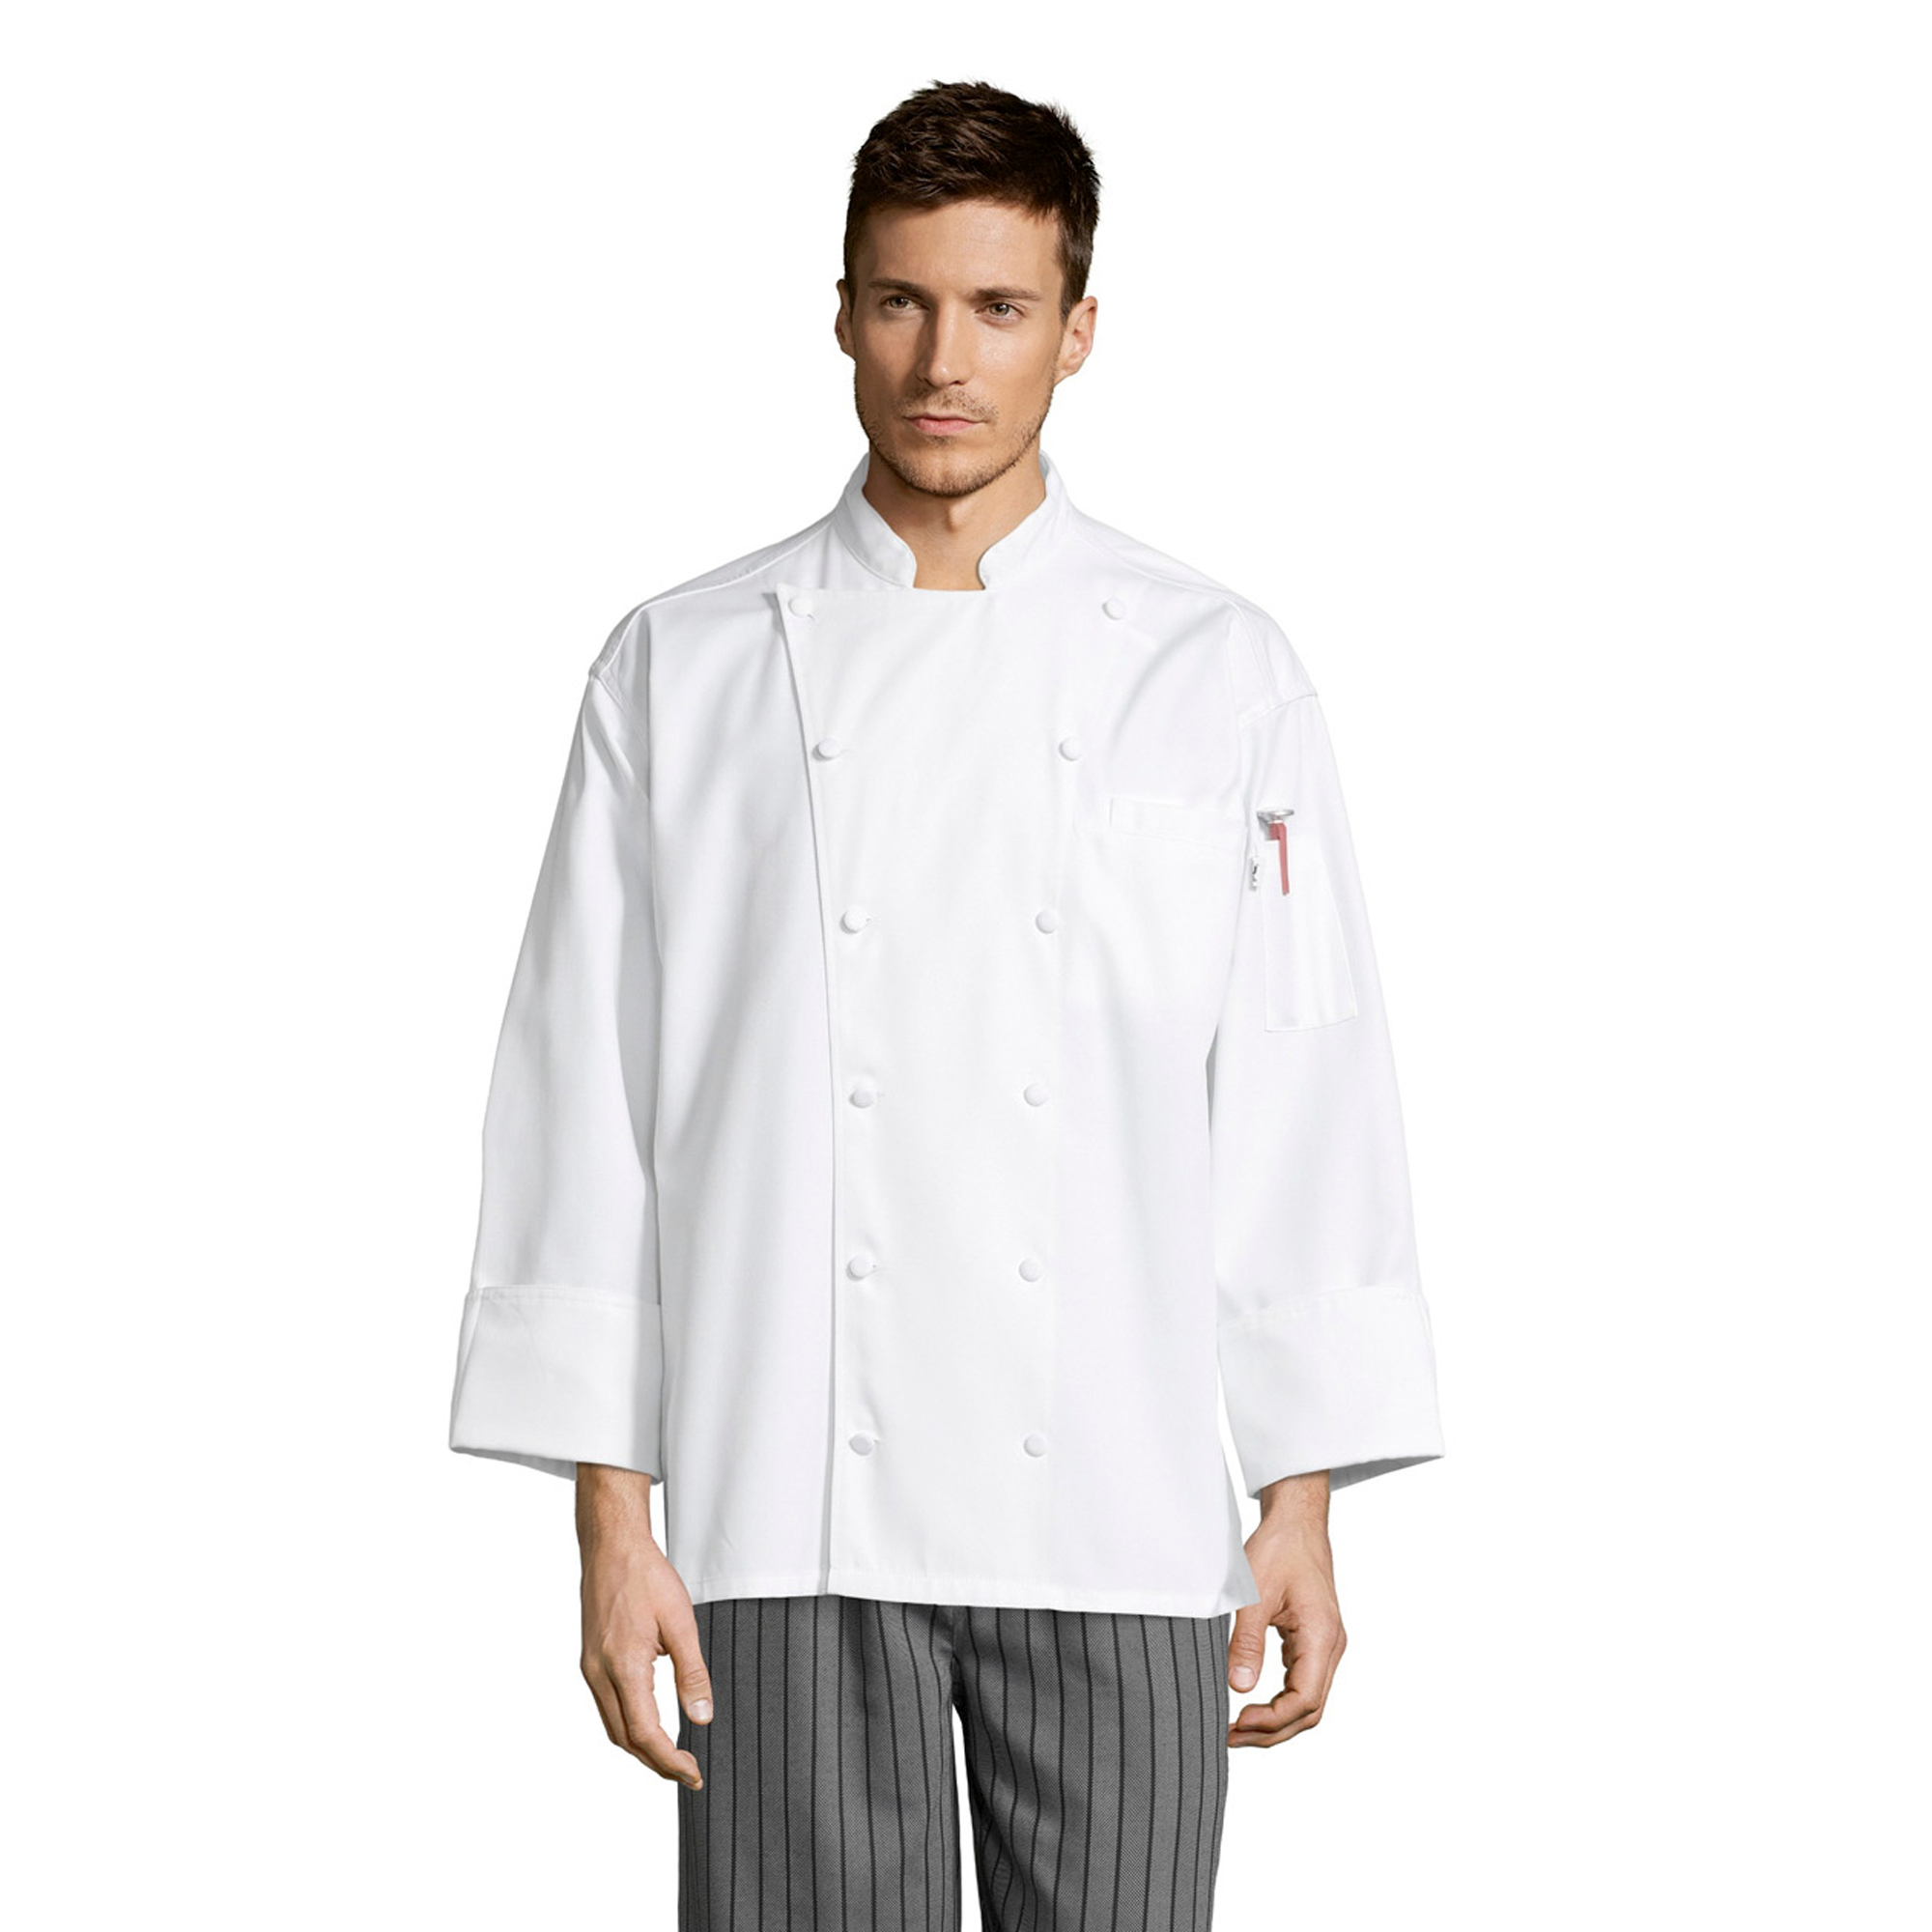 0437 Sienna Chef Coat